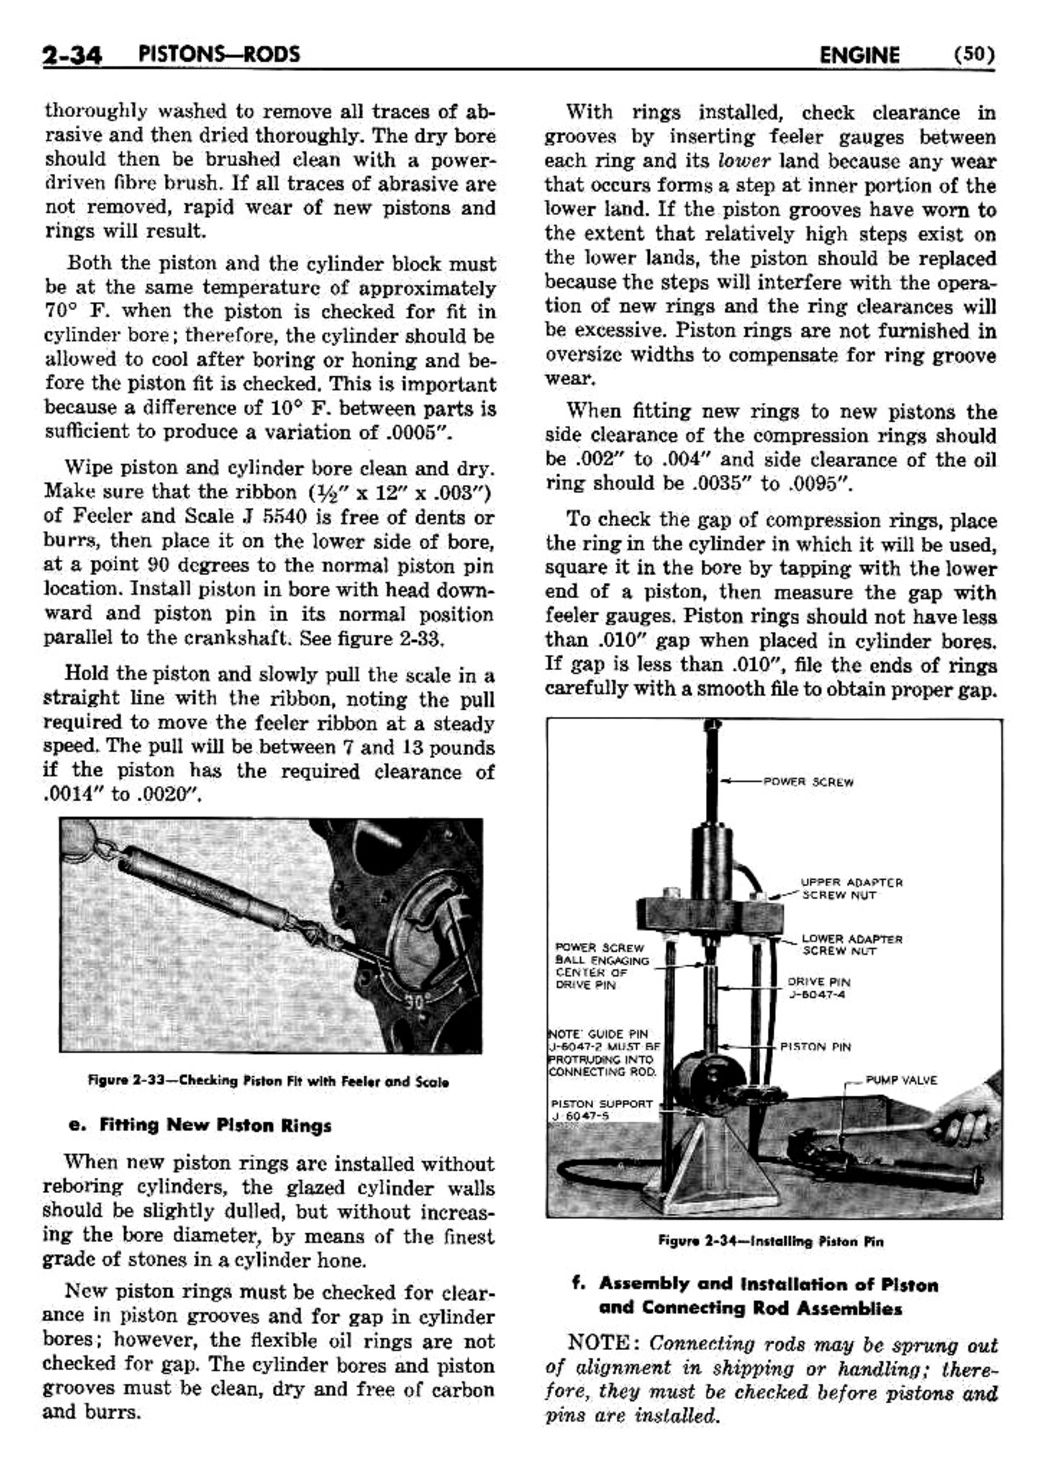 n_03 1956 Buick Shop Manual - Engine-034-034.jpg